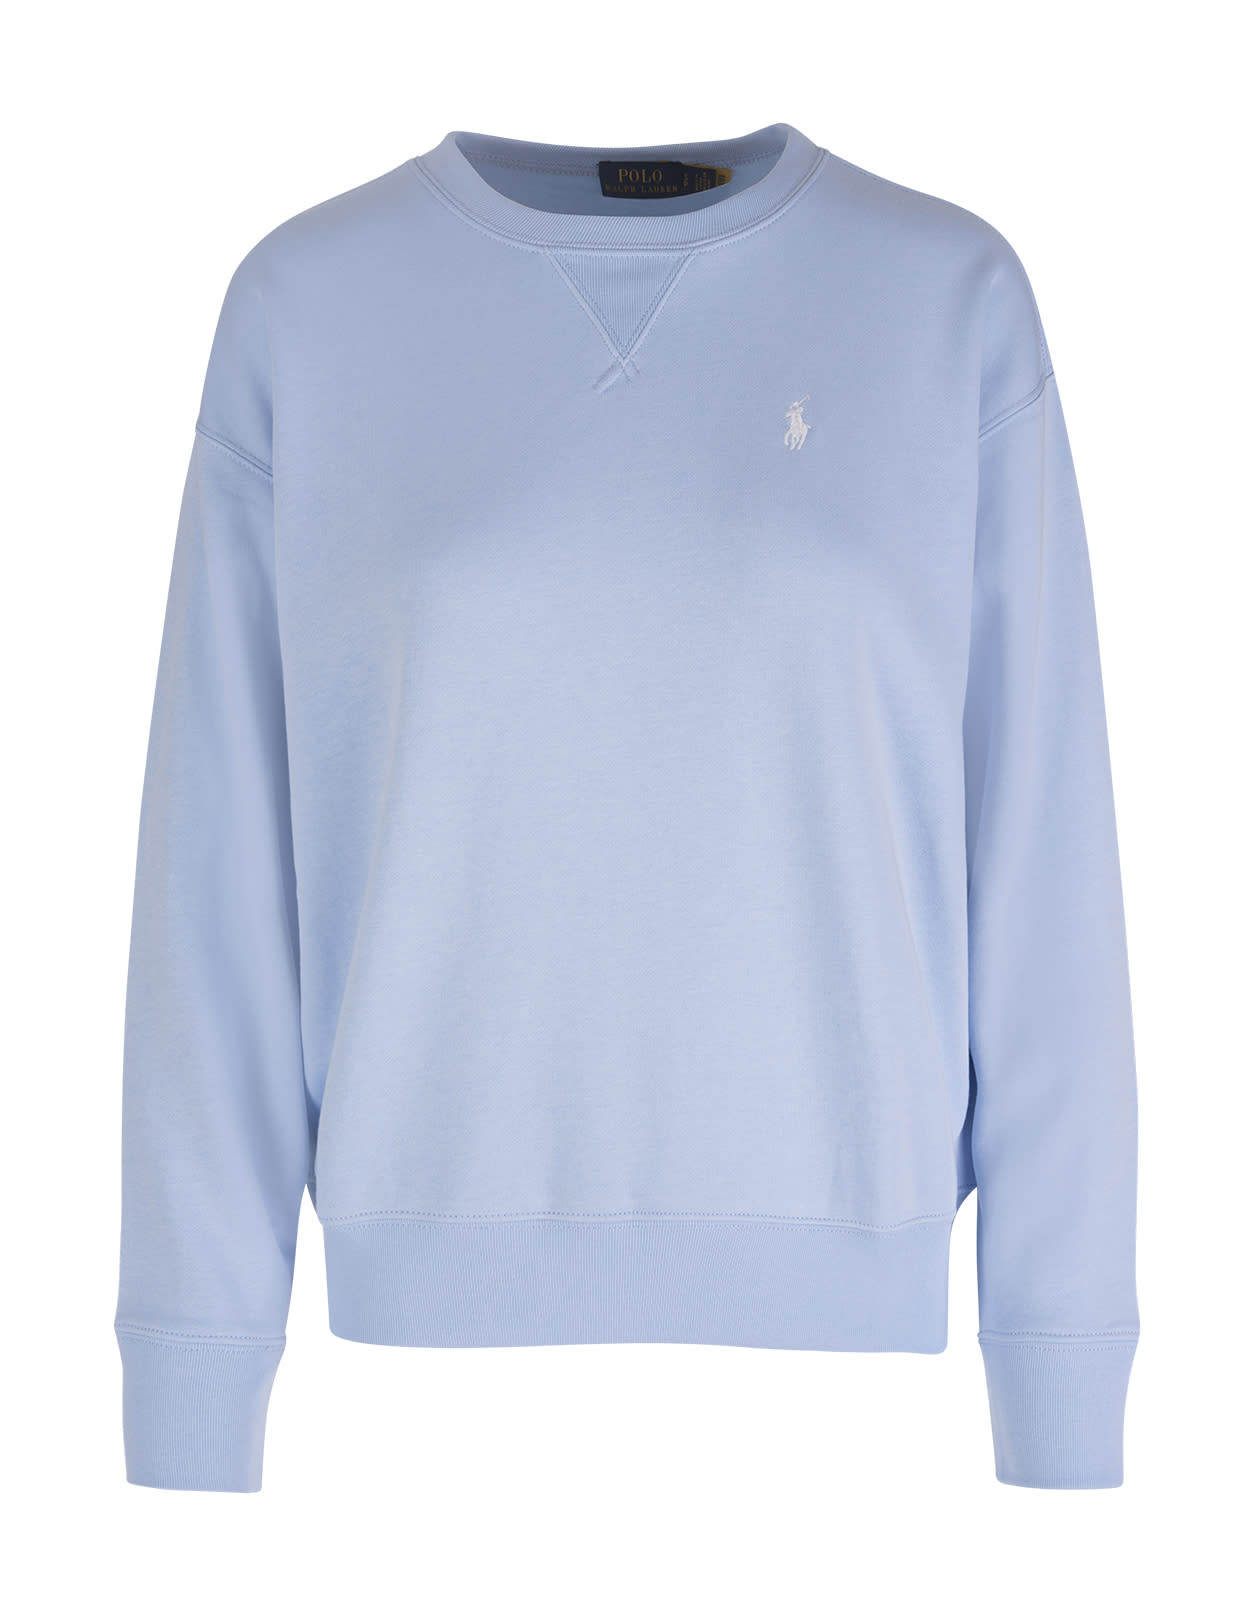 Ralph Lauren Woman Sky Blue Crewneck Sweatshirt With White Pony